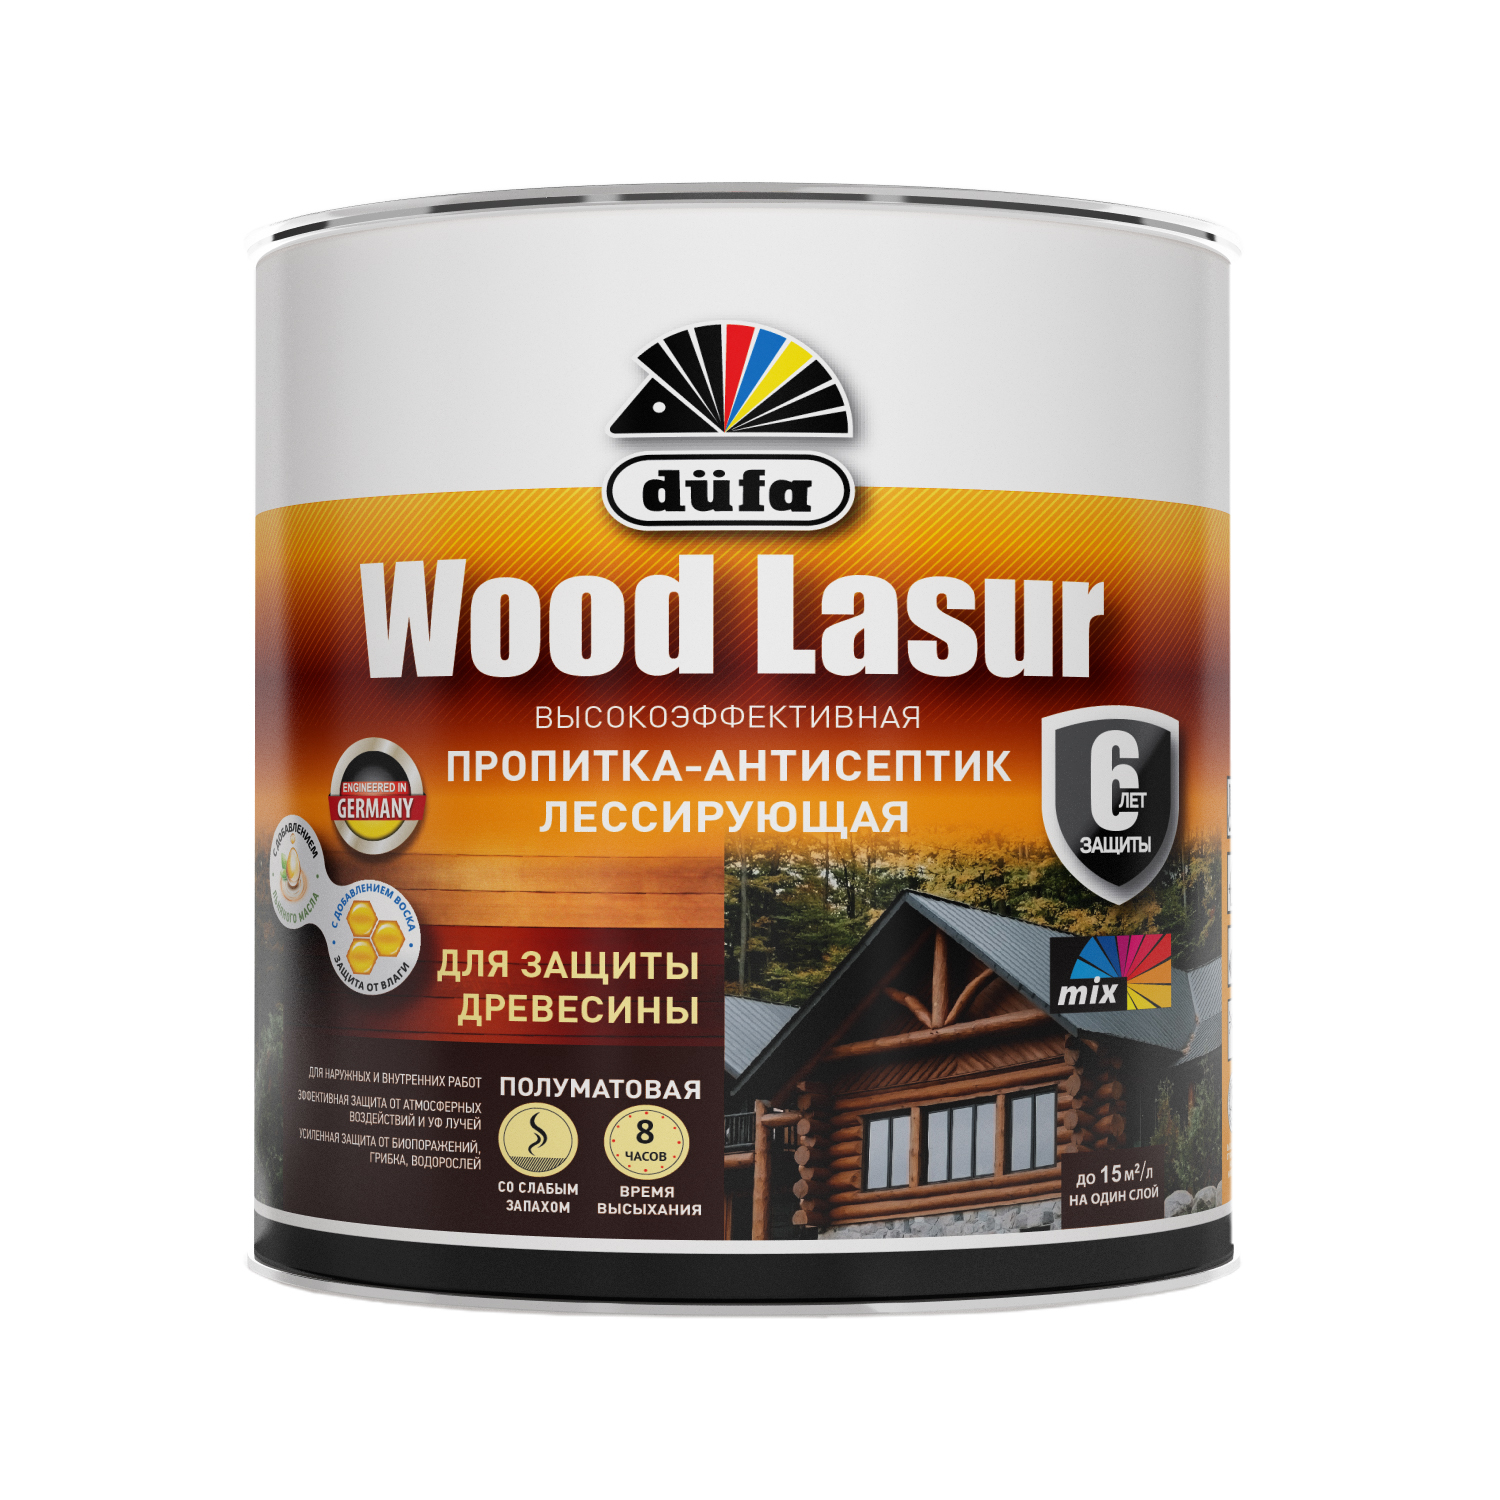 Пропитка для дерева Dufa Wood Lasur Сосна, 900 мл